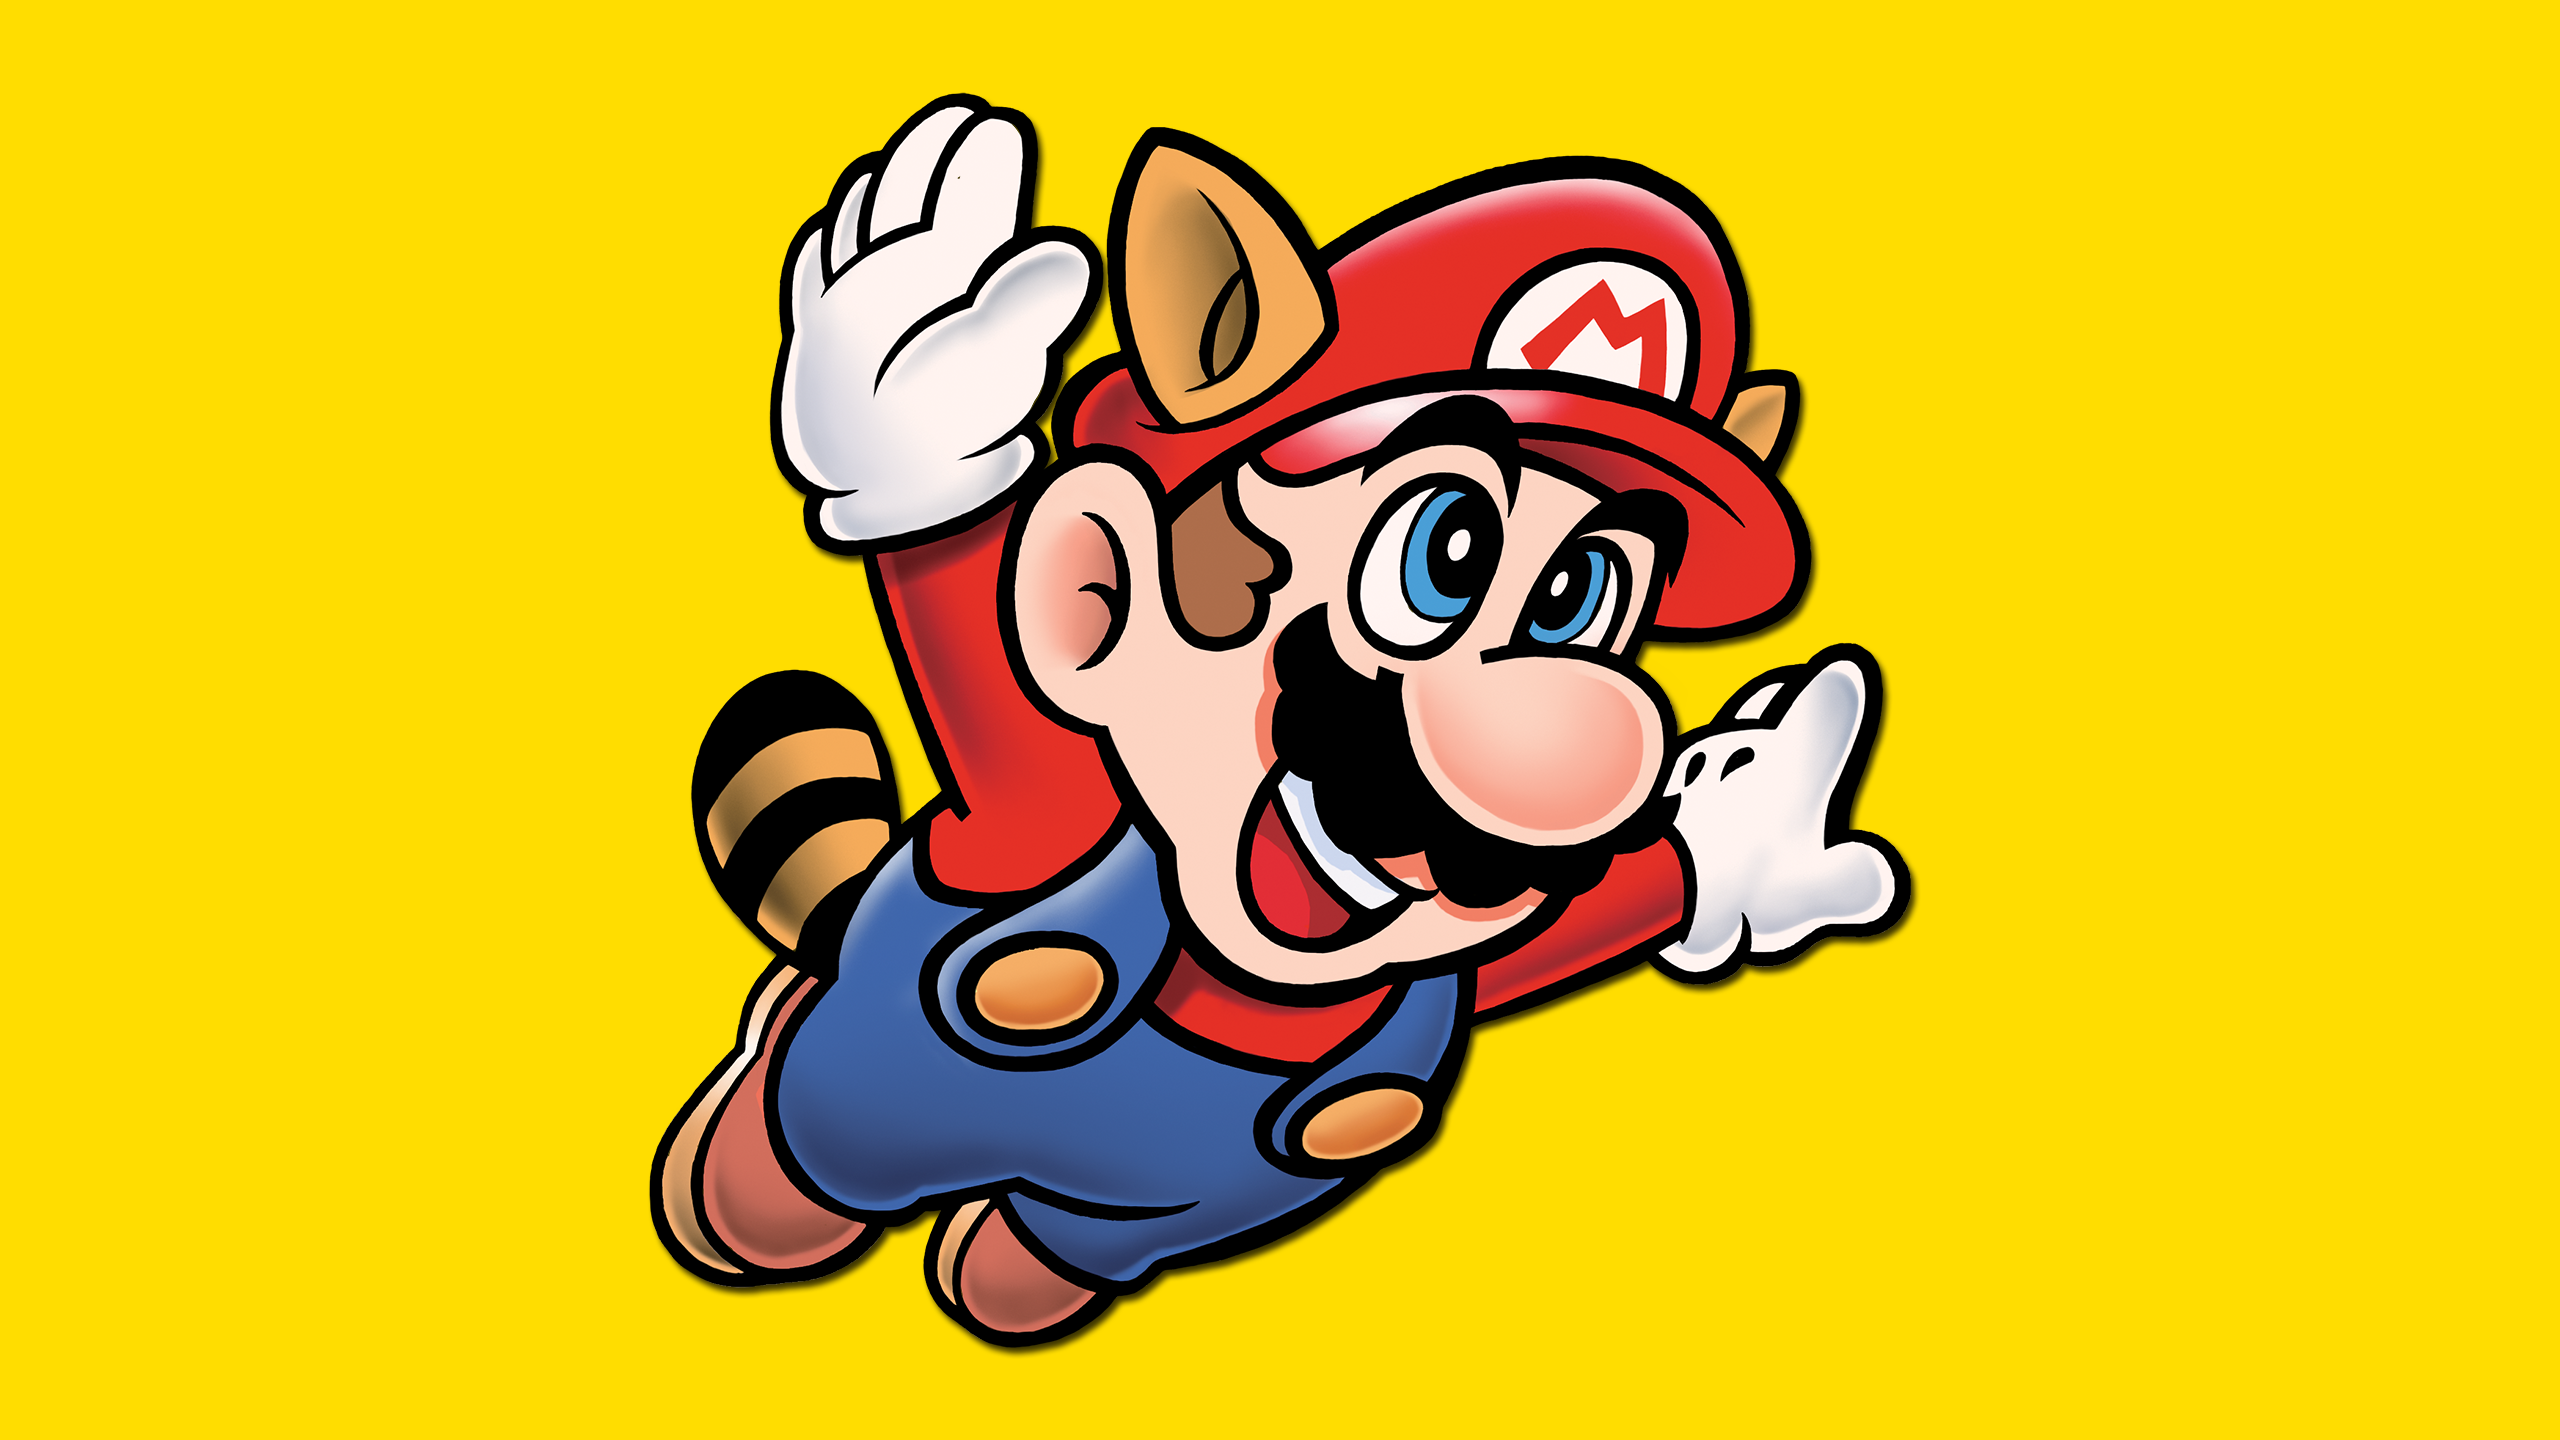 Video Game Super Mario Bros. 3 HD Wallpaper | Background Image